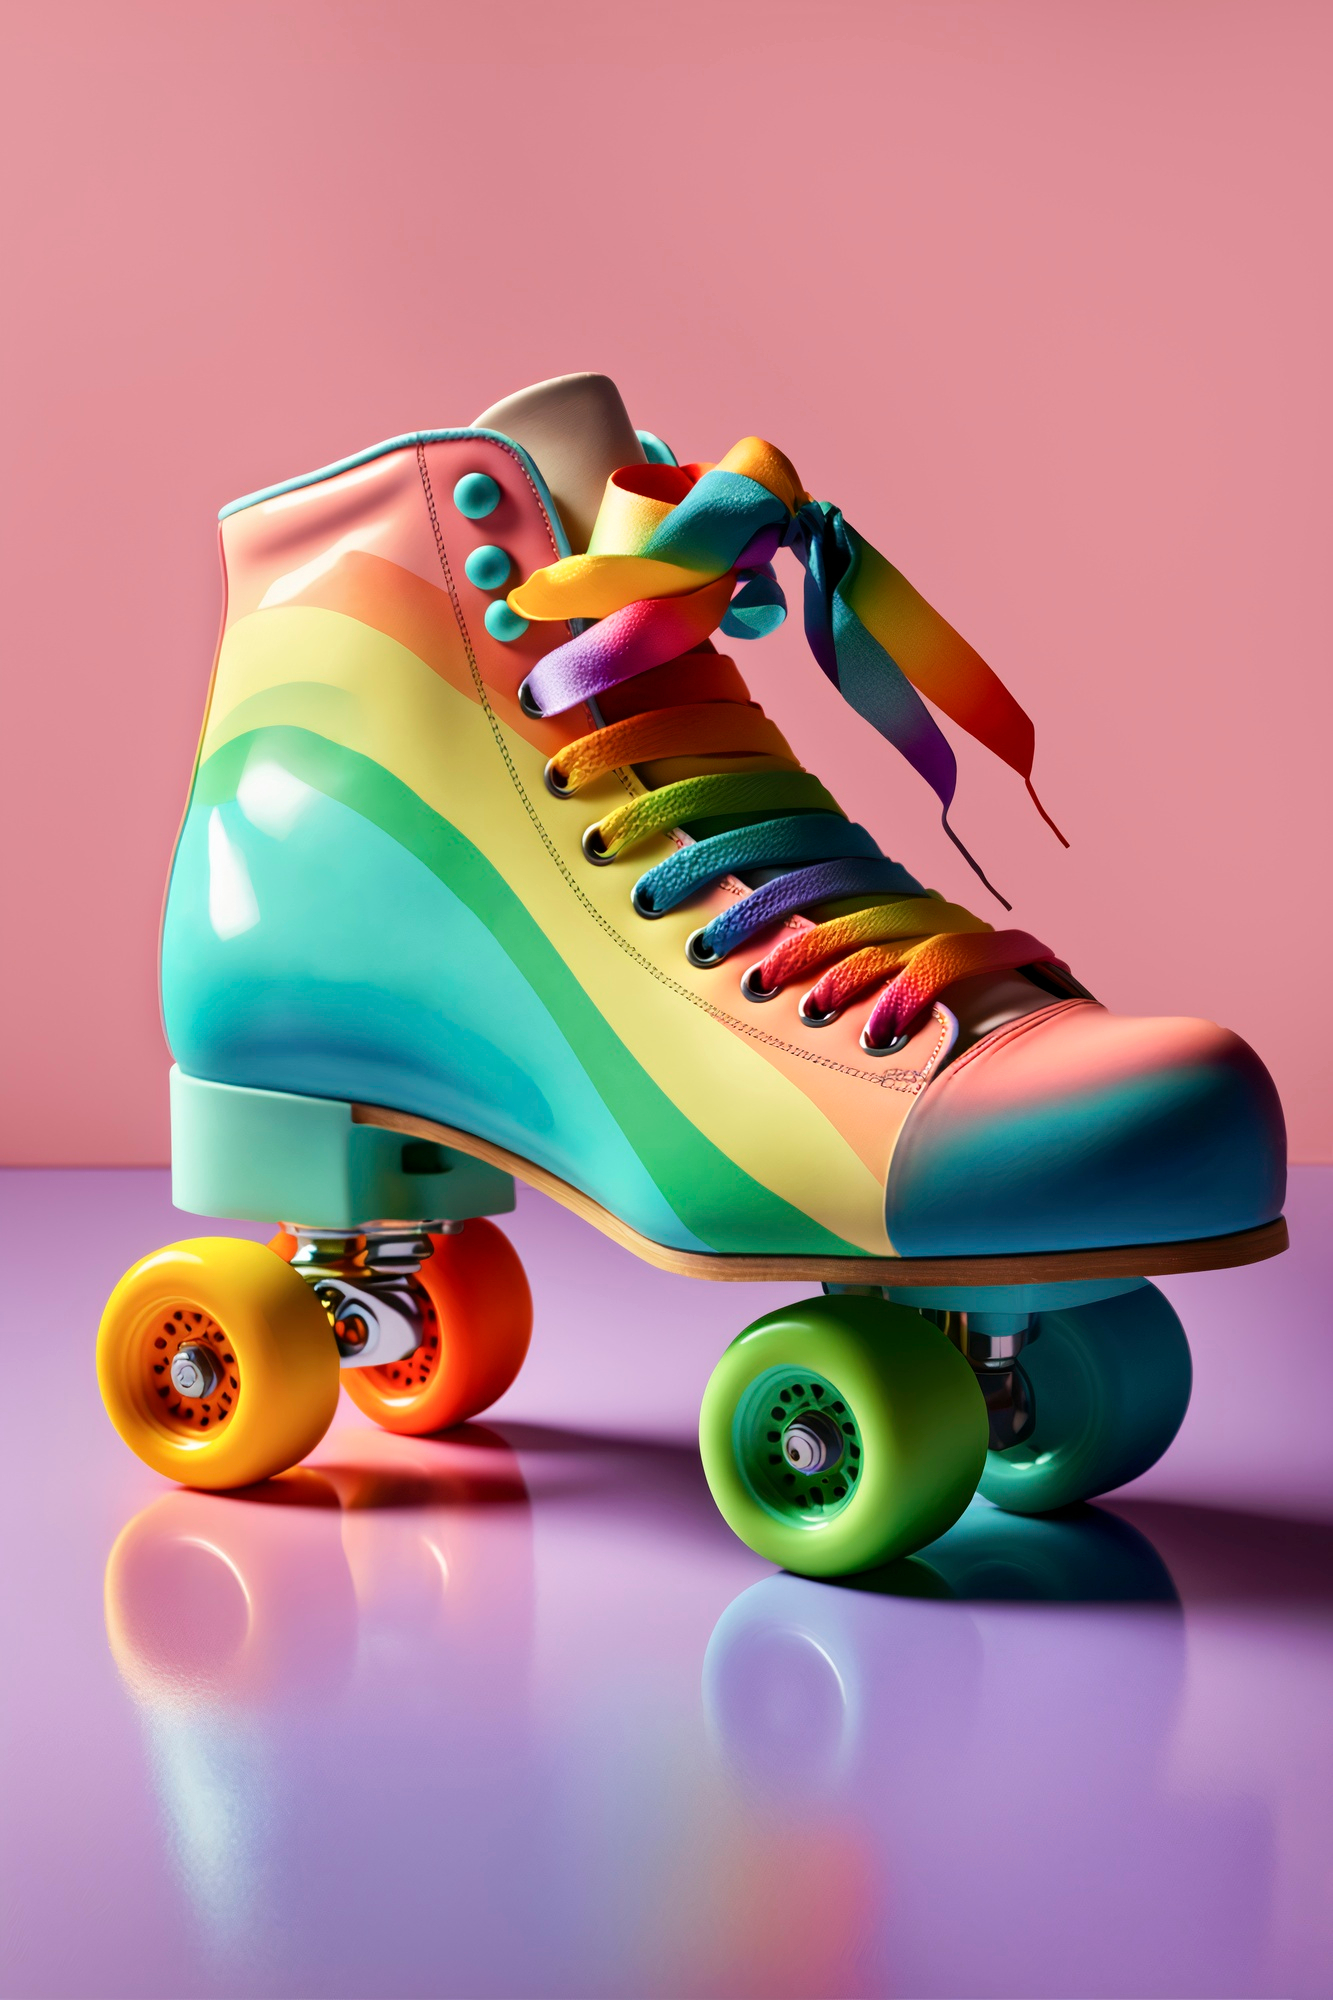 best skating shoes